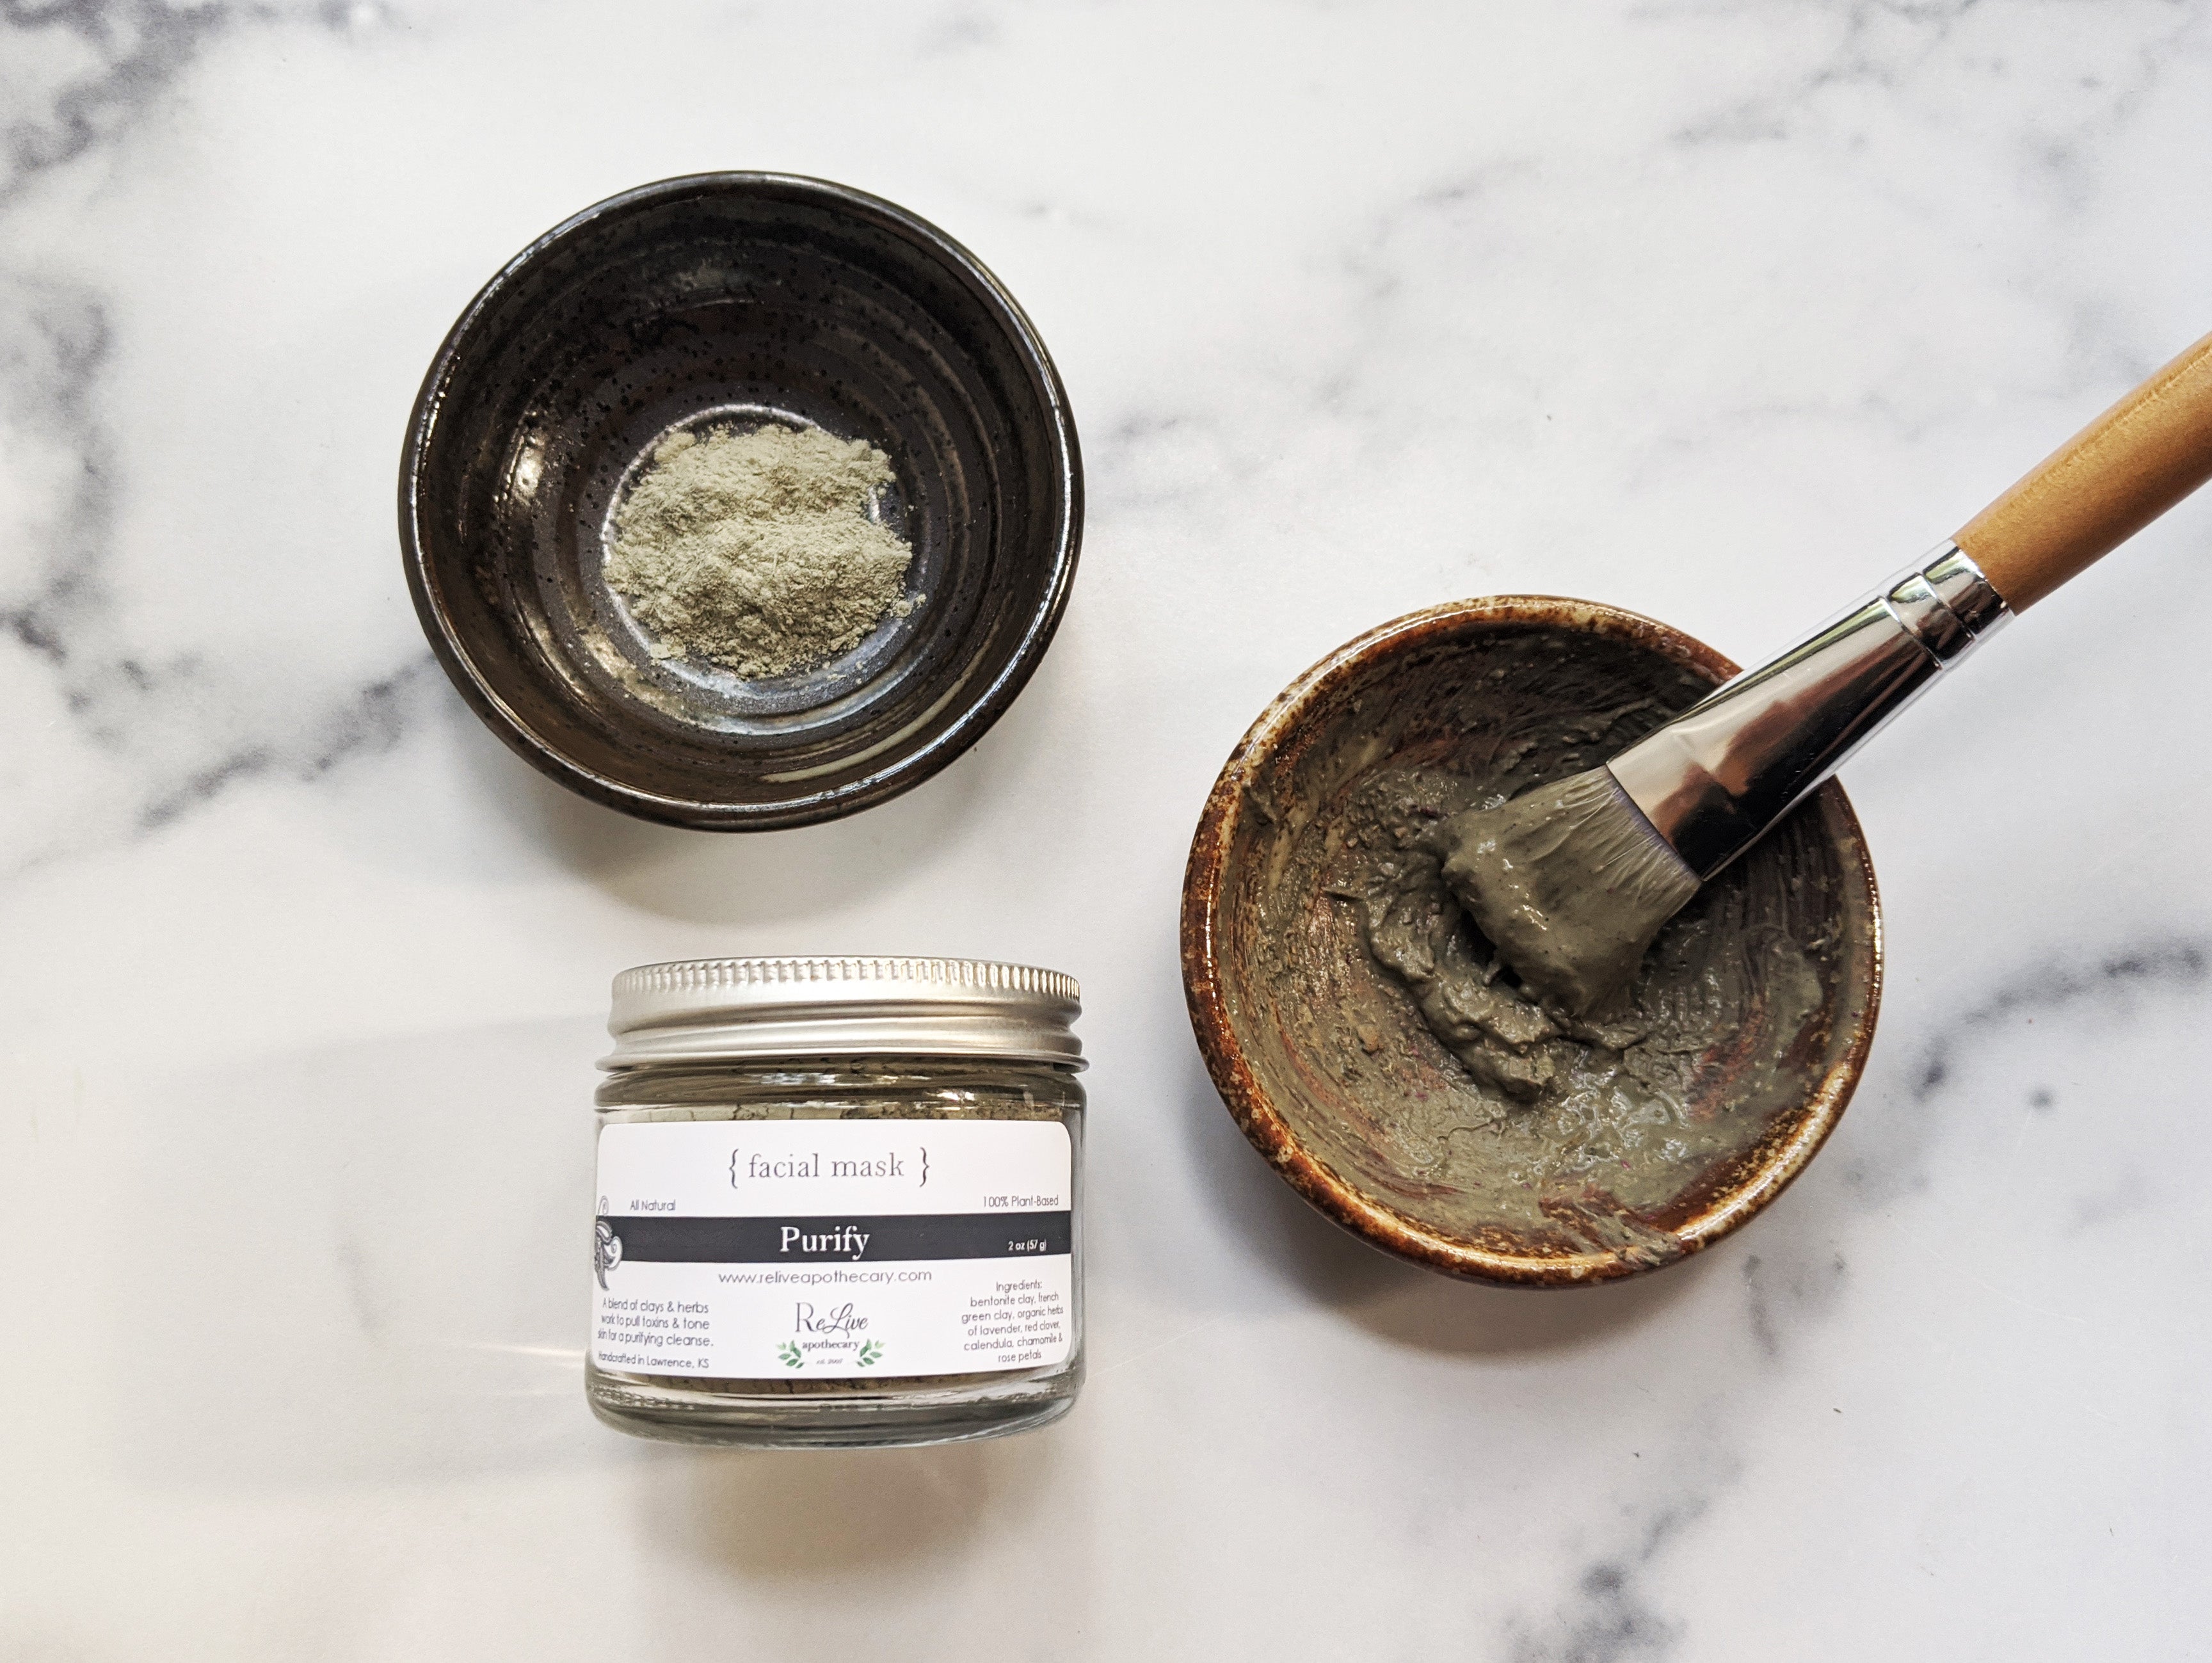 Bentonite Clay – Little Herbal Apothecary